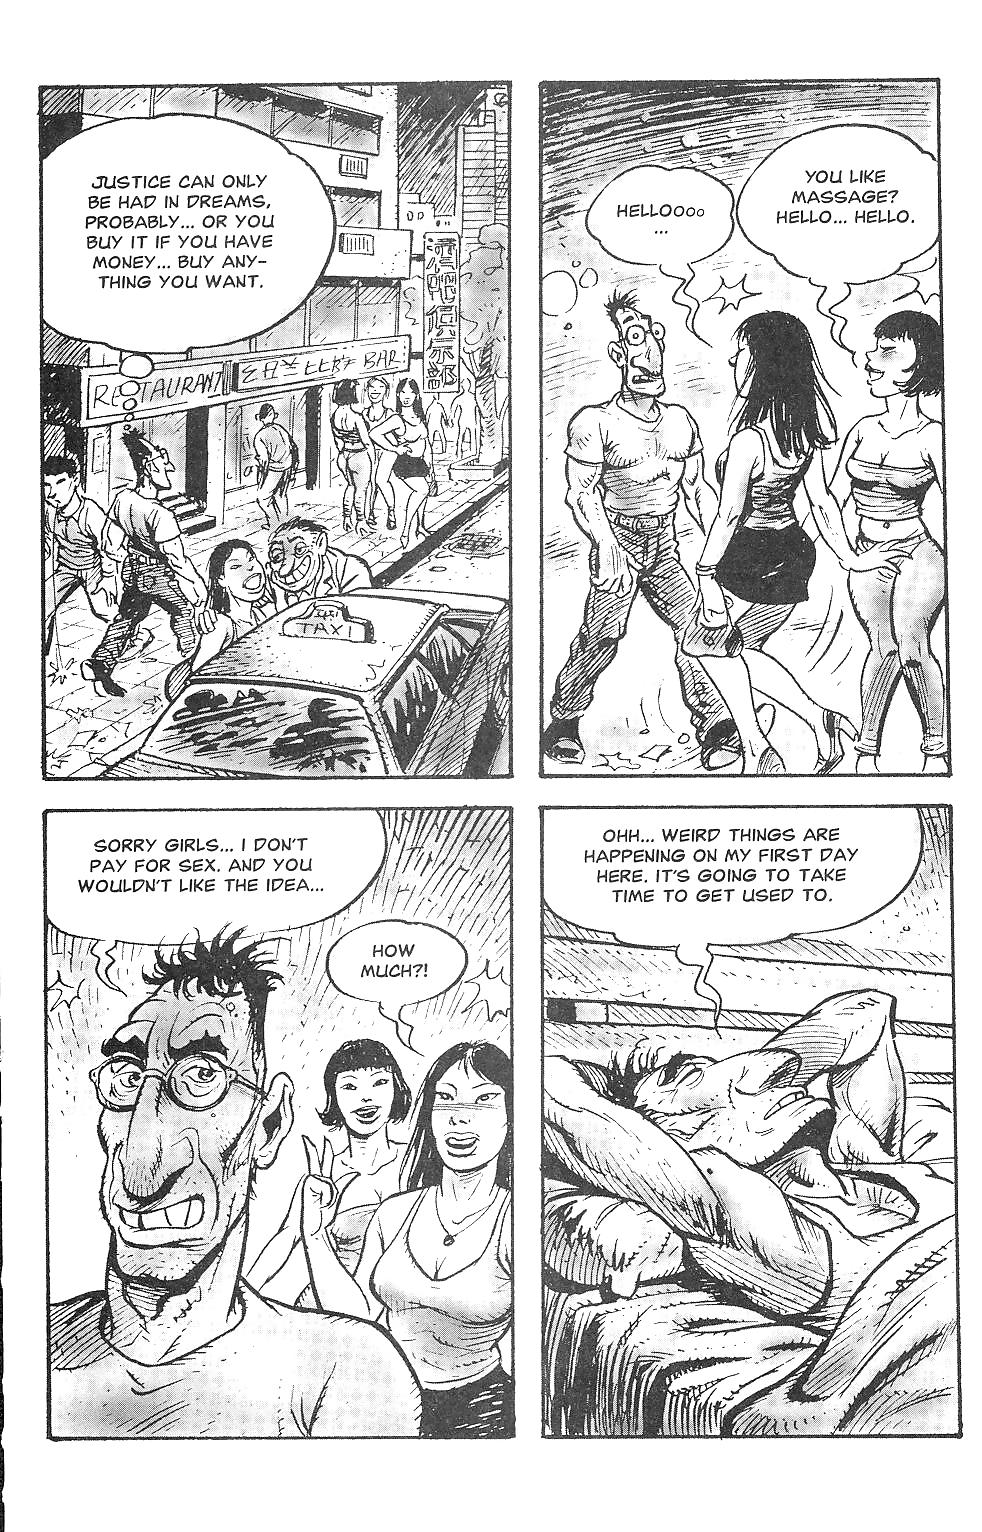 Orient Sexpress comics #17273246